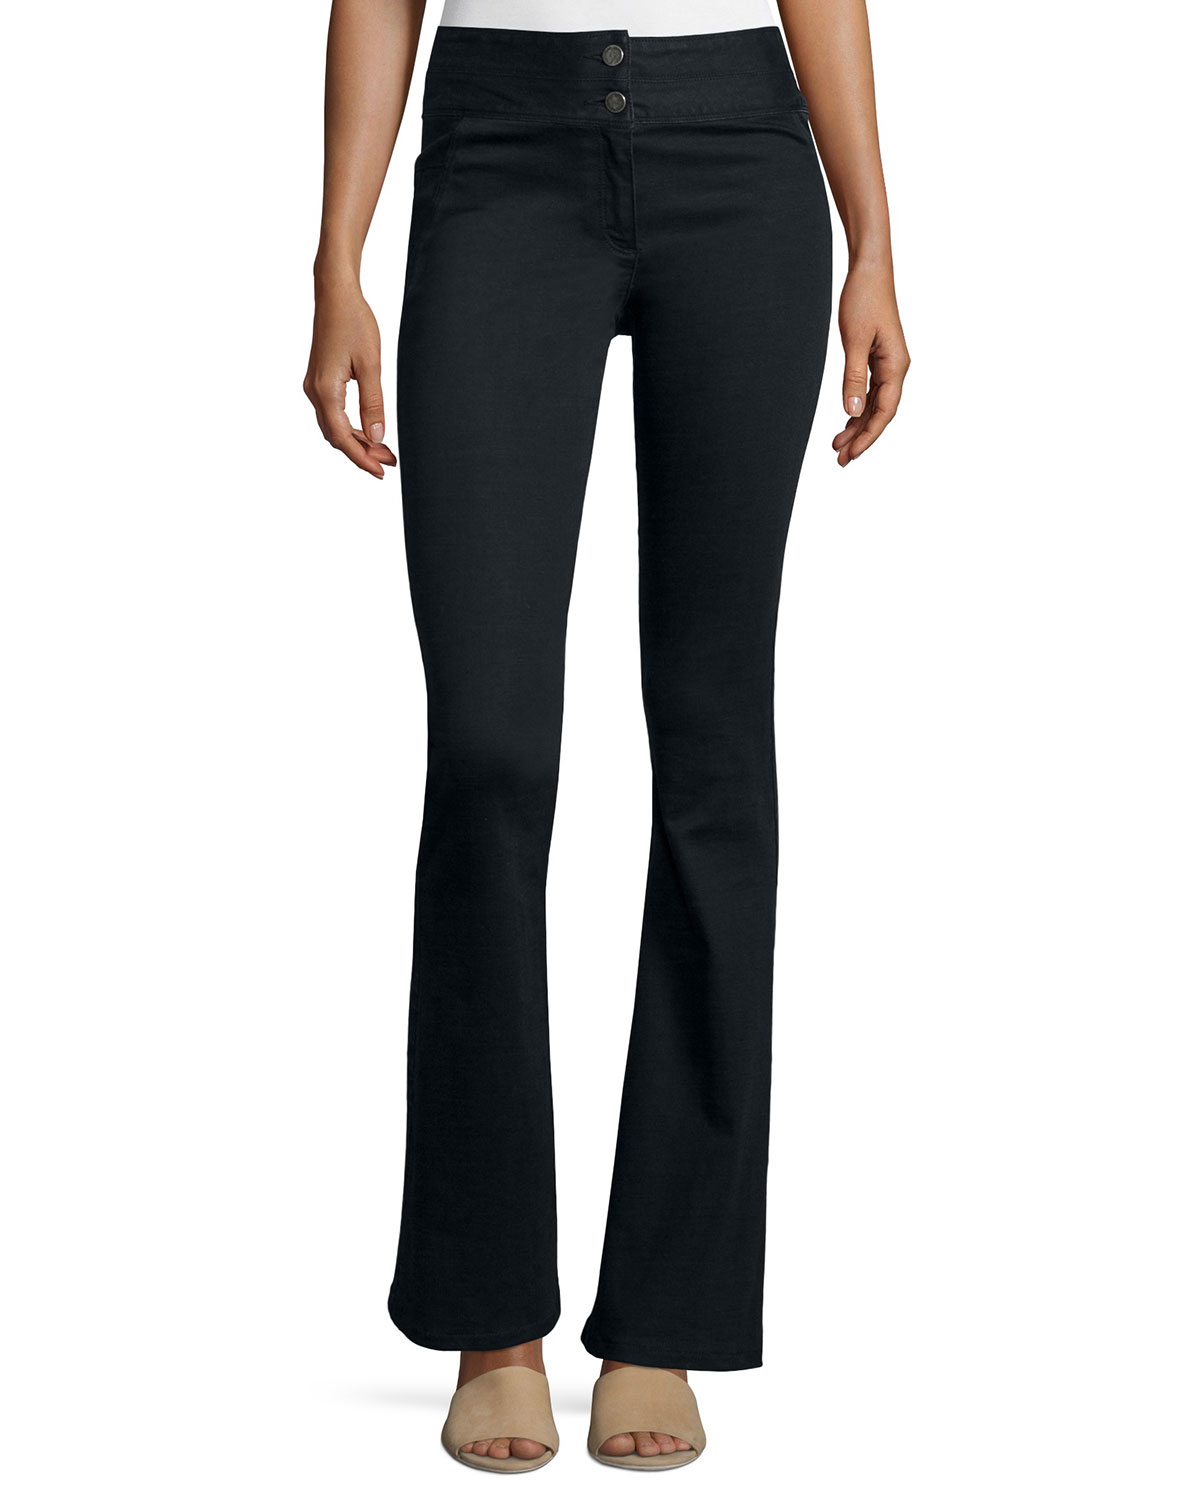 Lyst - Veronica Beard High-waist Flared Pants in Black